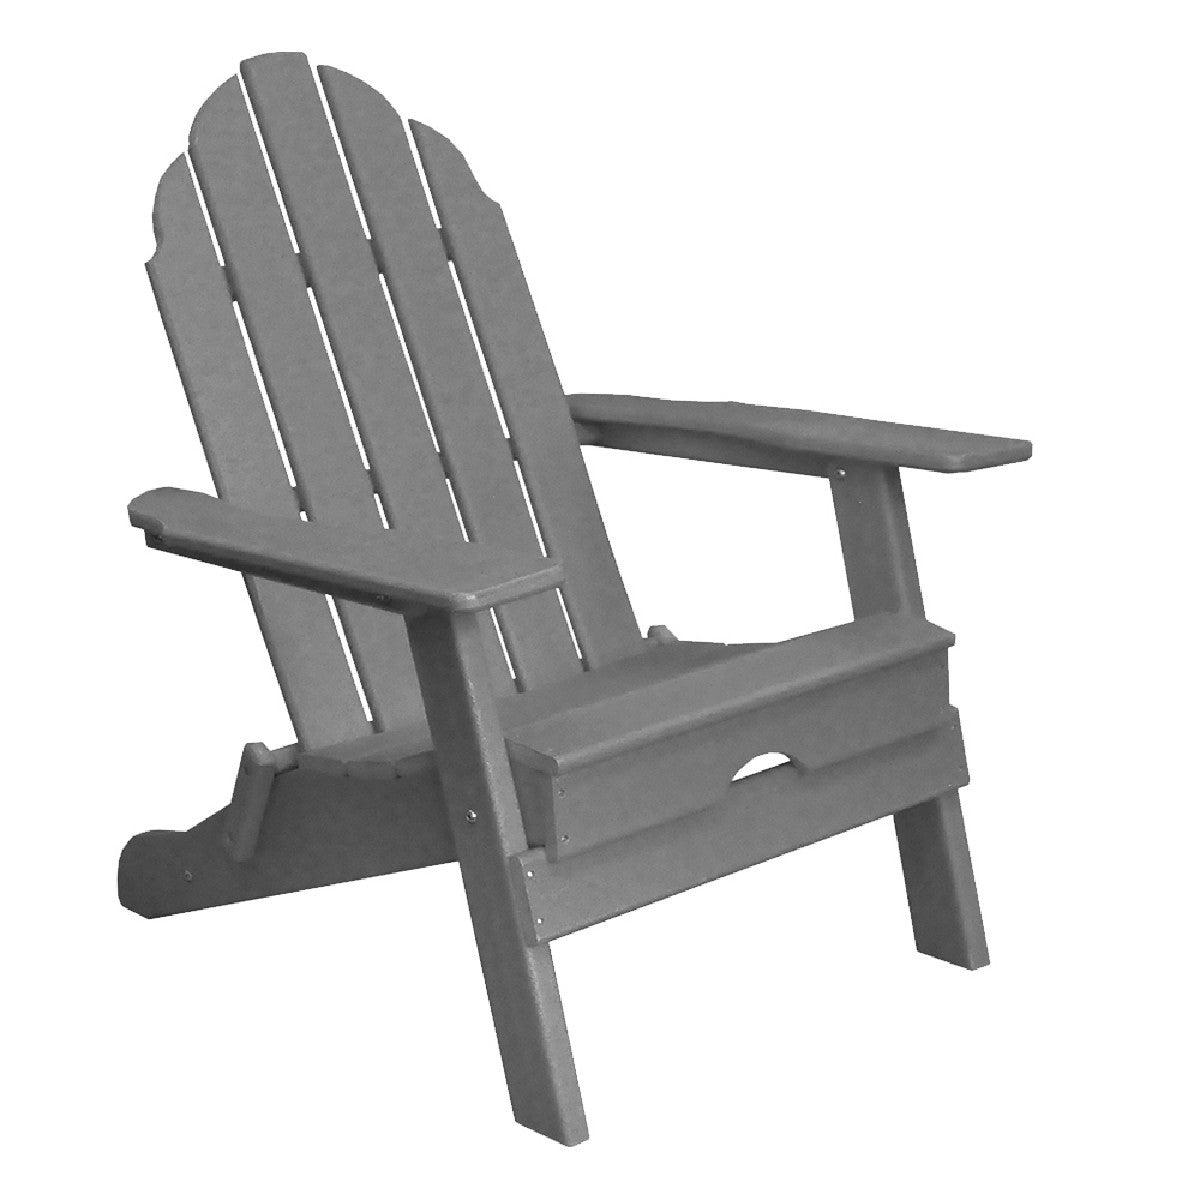 30" Gray Heavy Duty Plastic Adirondack Chair